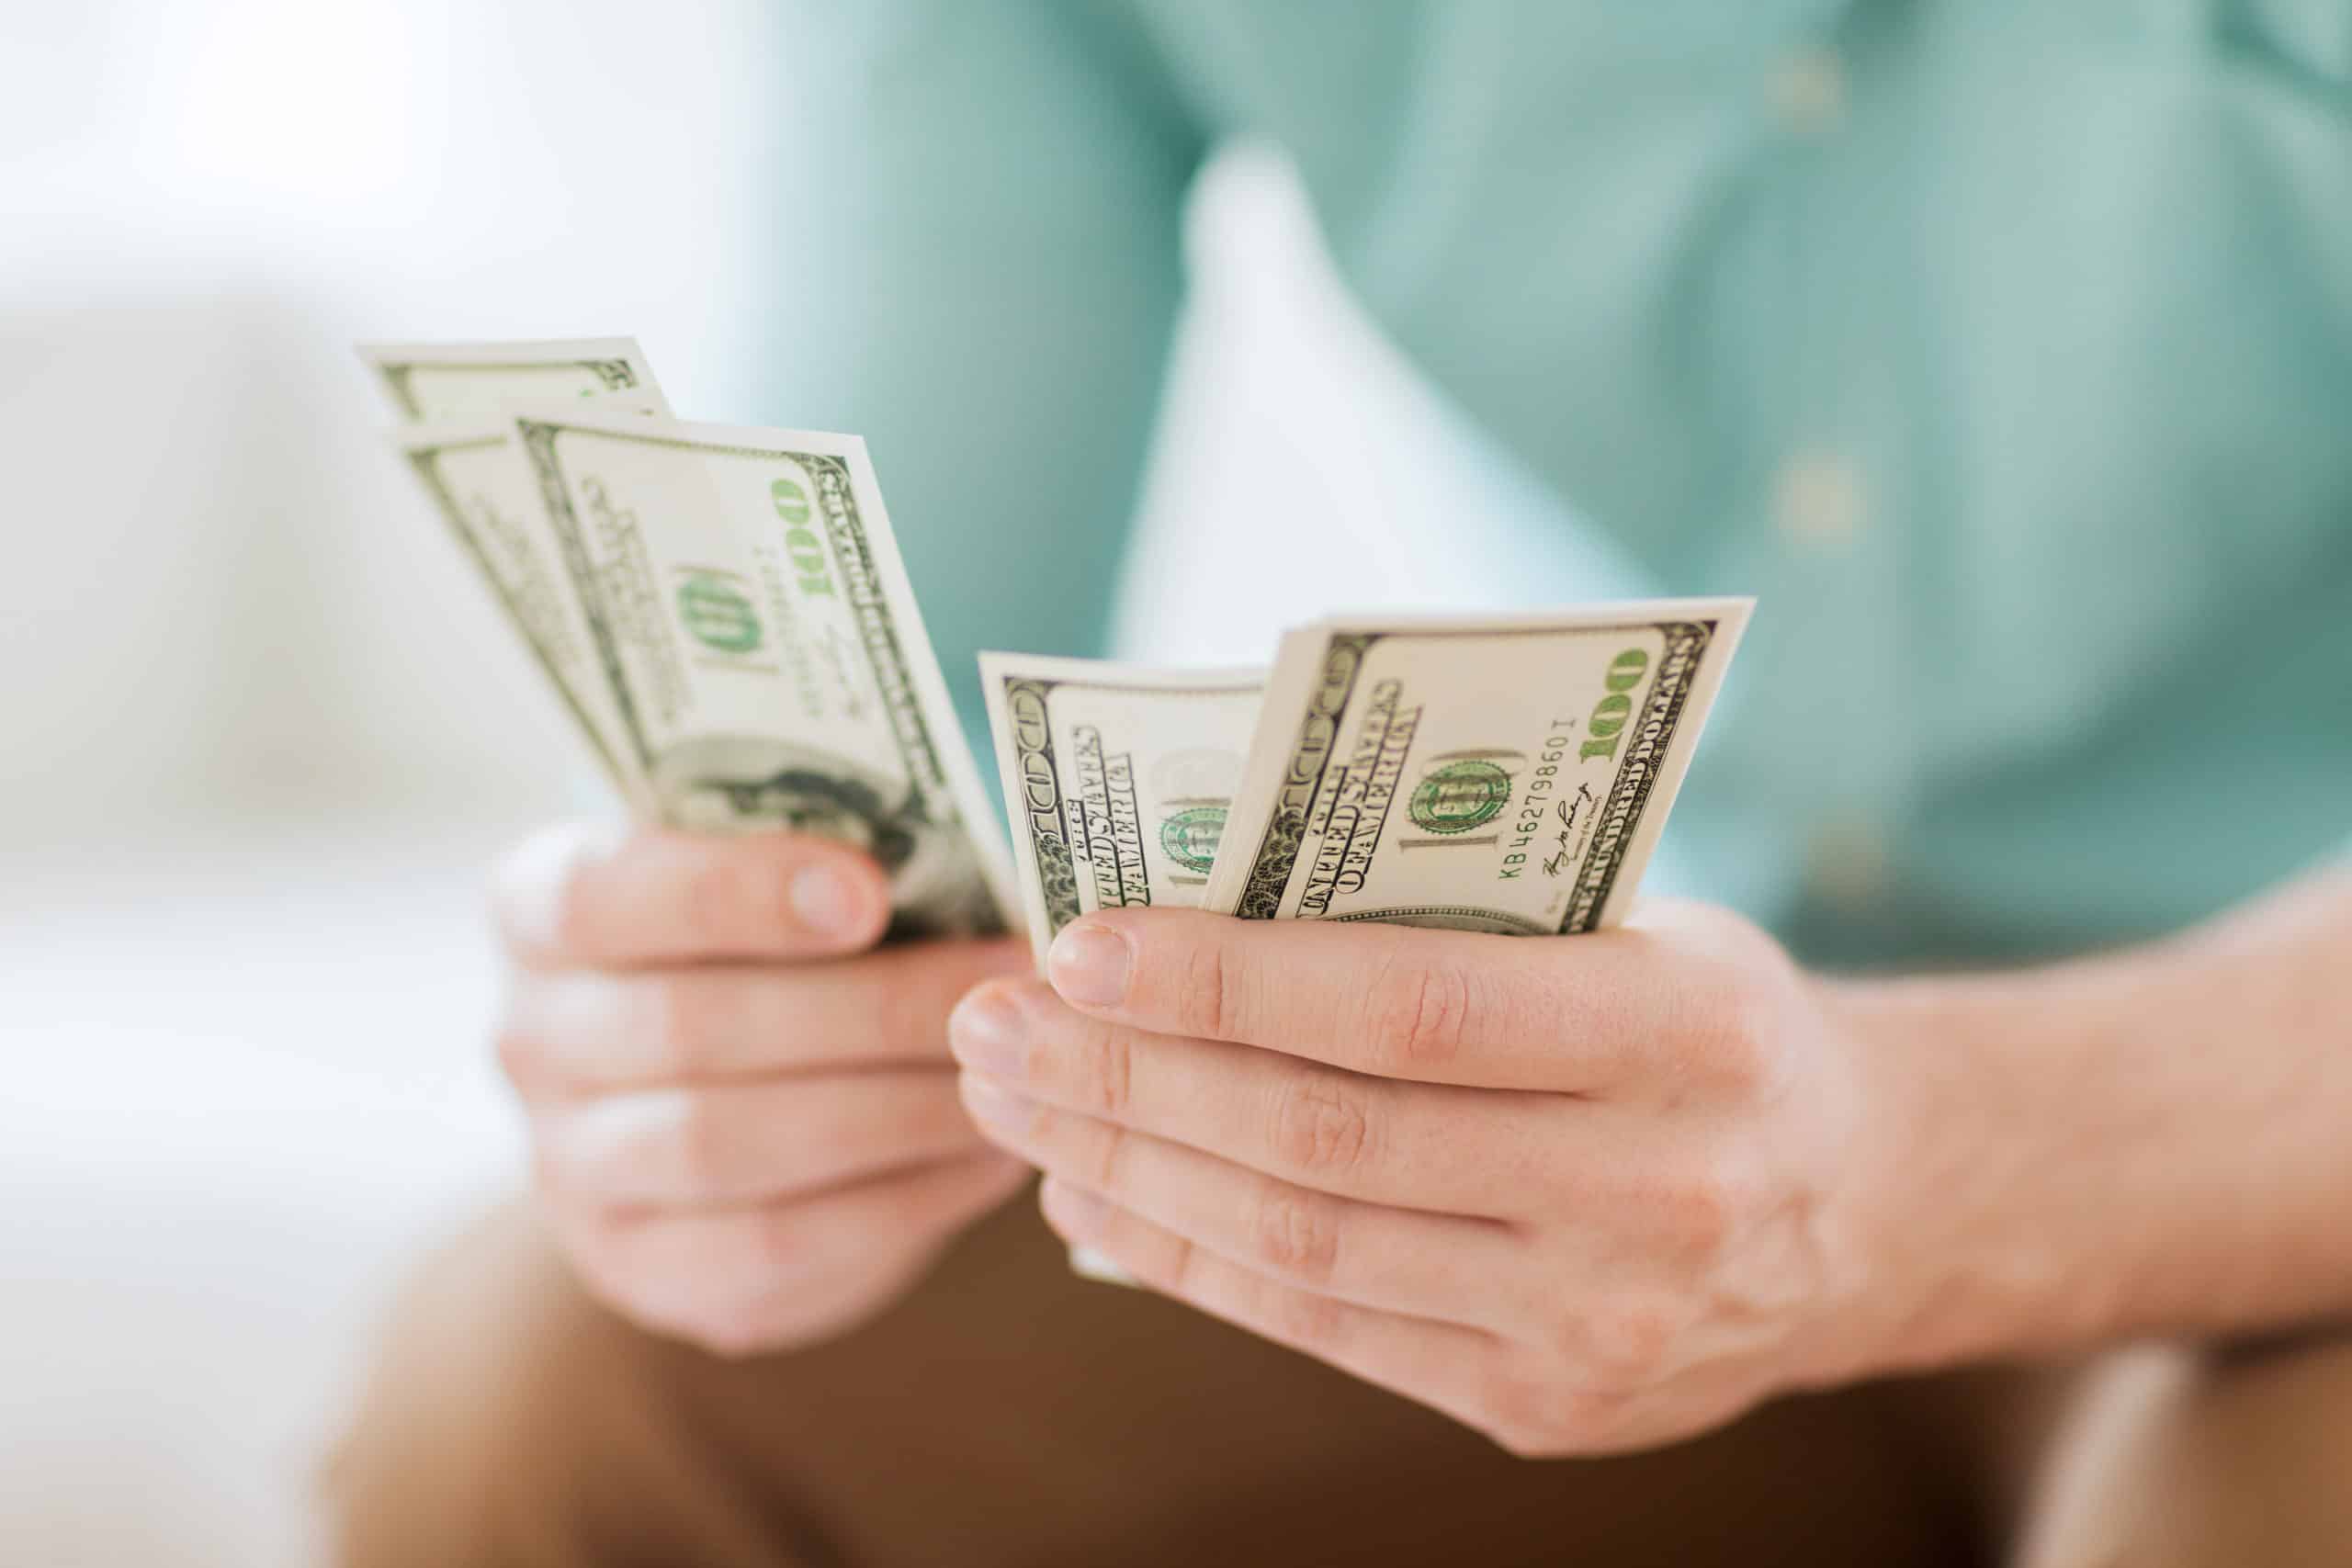 Man's hands holding $100 bills budgeting money